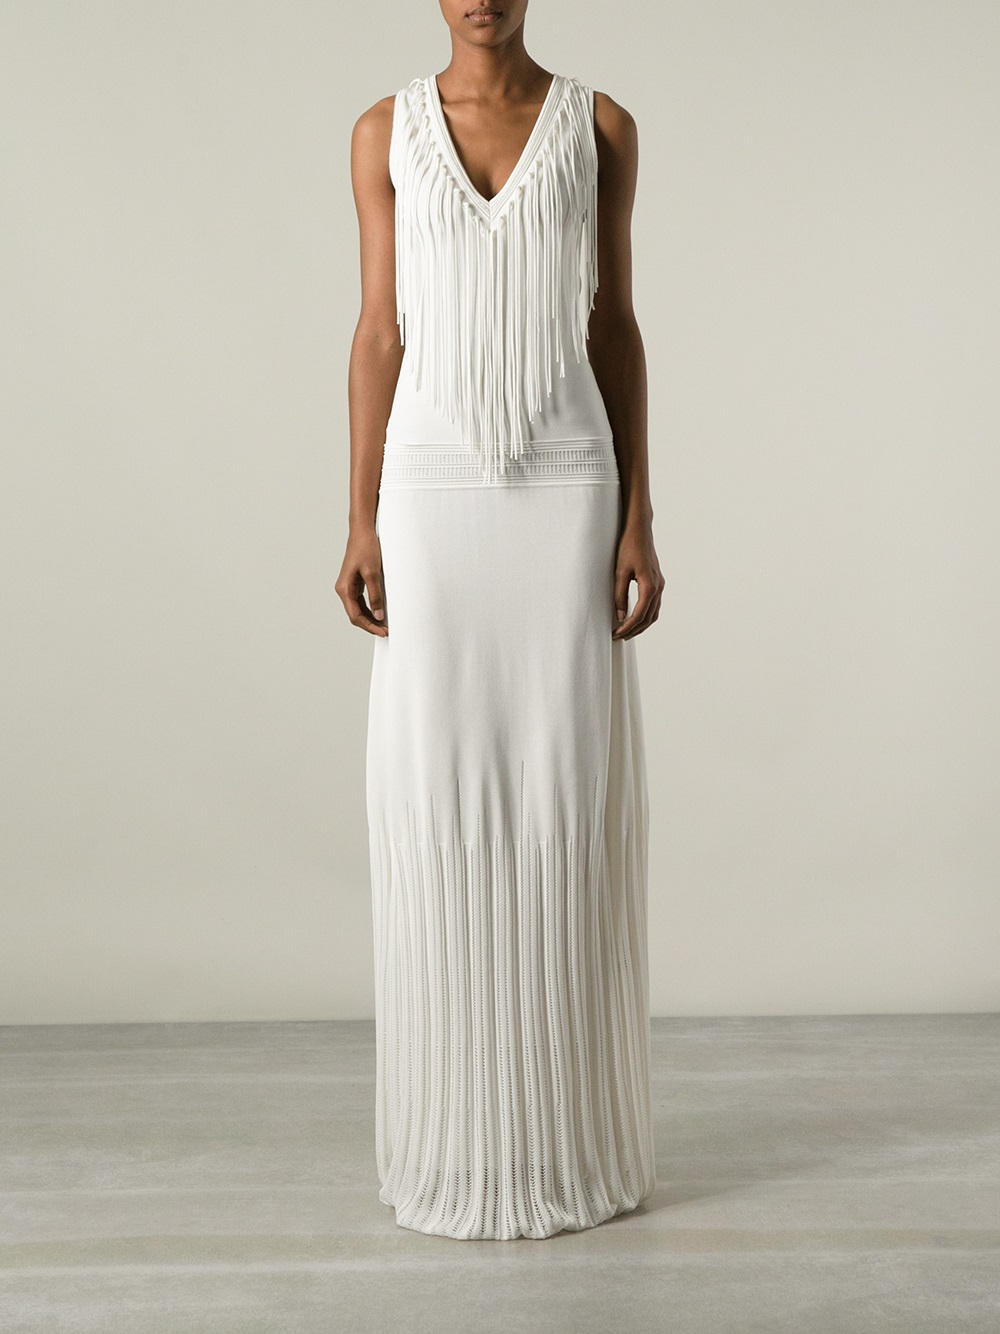 Roberto Cavalli Fringed Evening Dress in White - Lyst